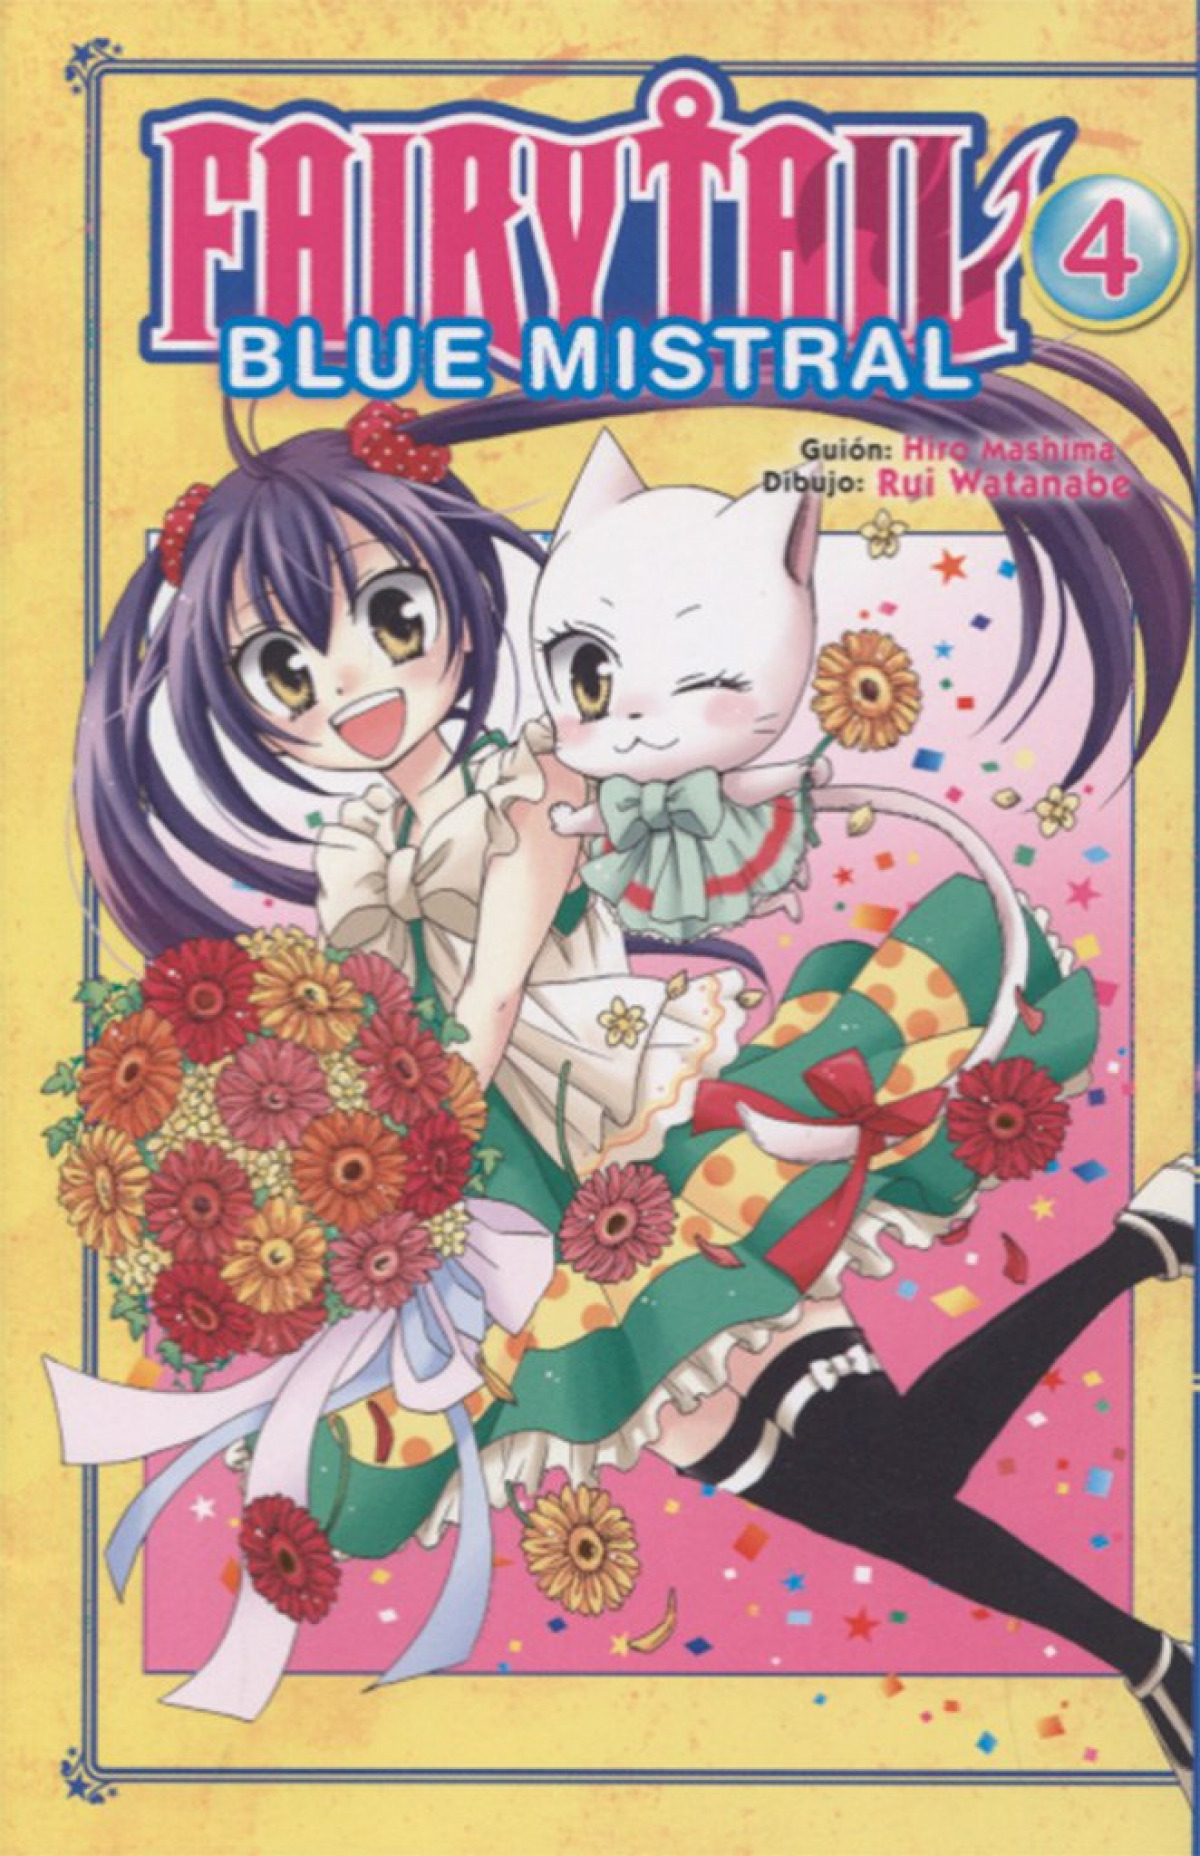 Fairy tail blue mistral - Hiro Mashima, Rui Watanabe